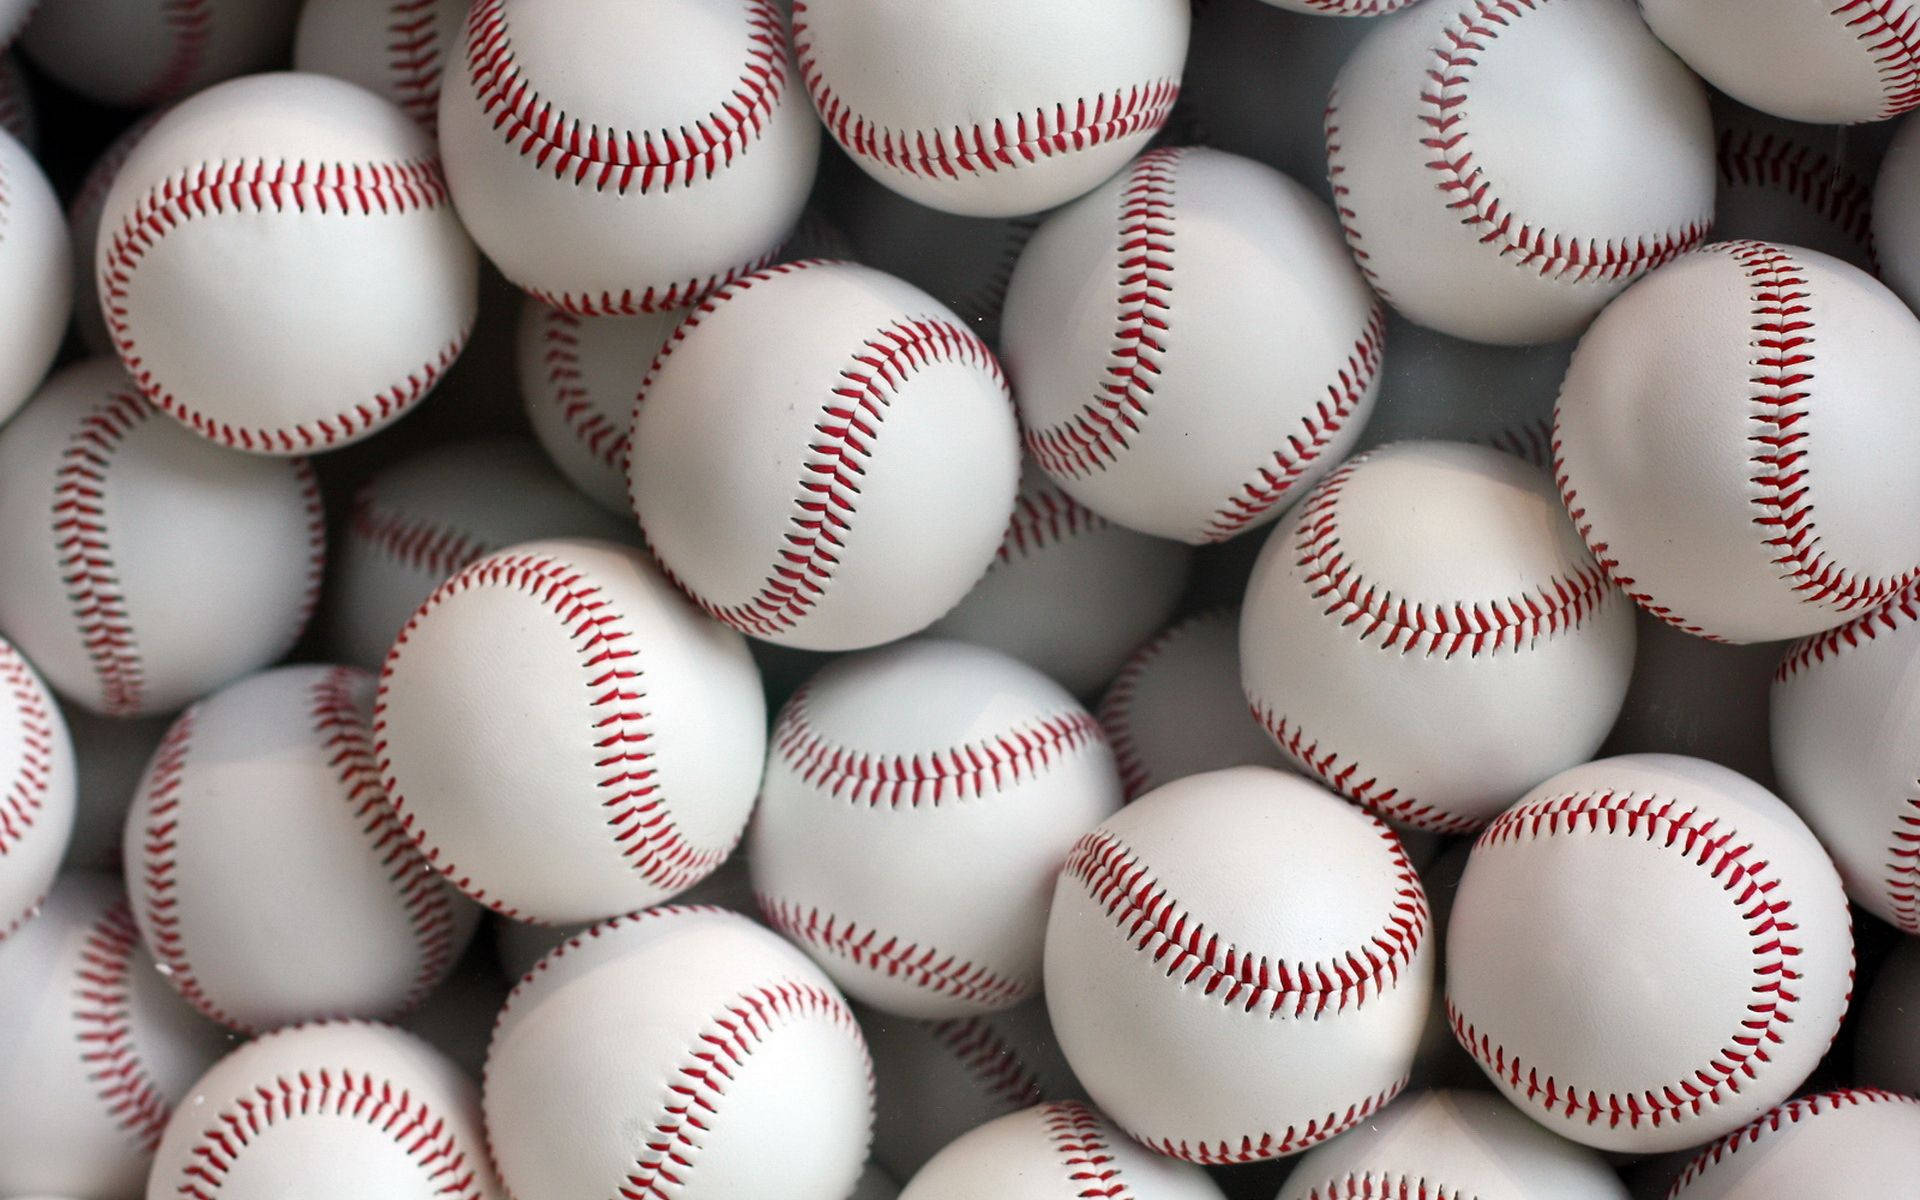 Cool Baseballs Combined Background